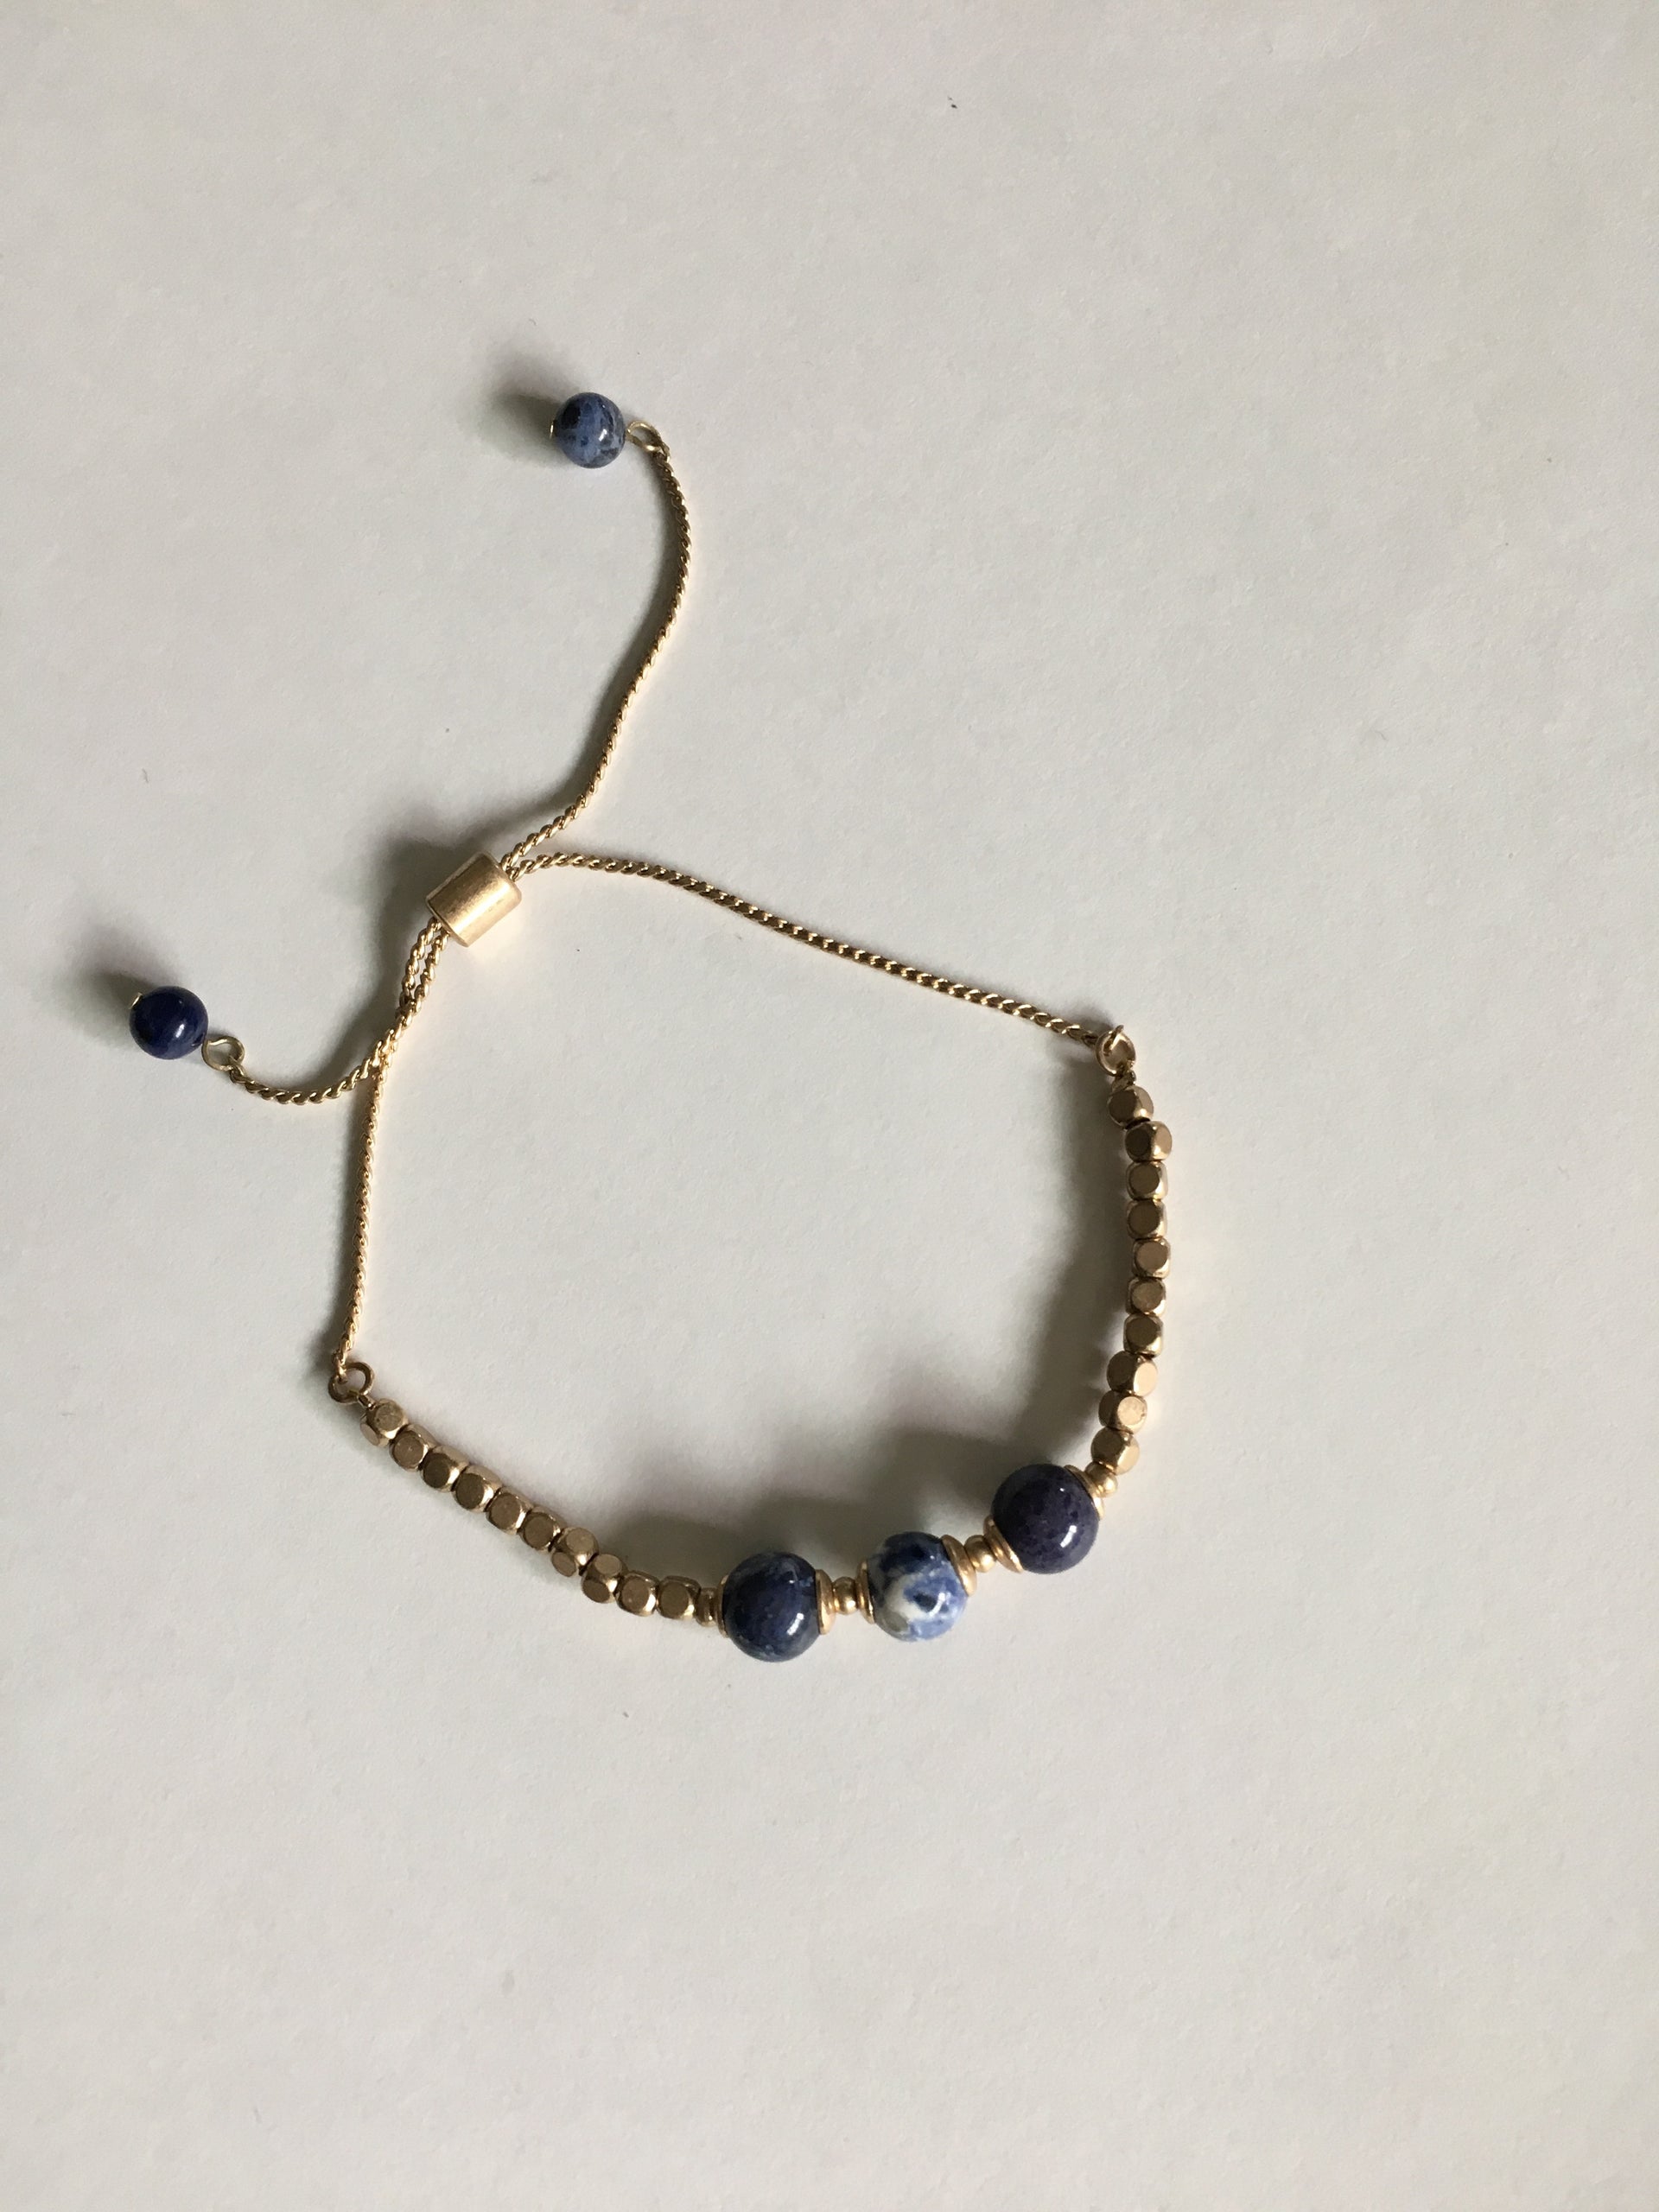 Blue Marble Stone Bracelet